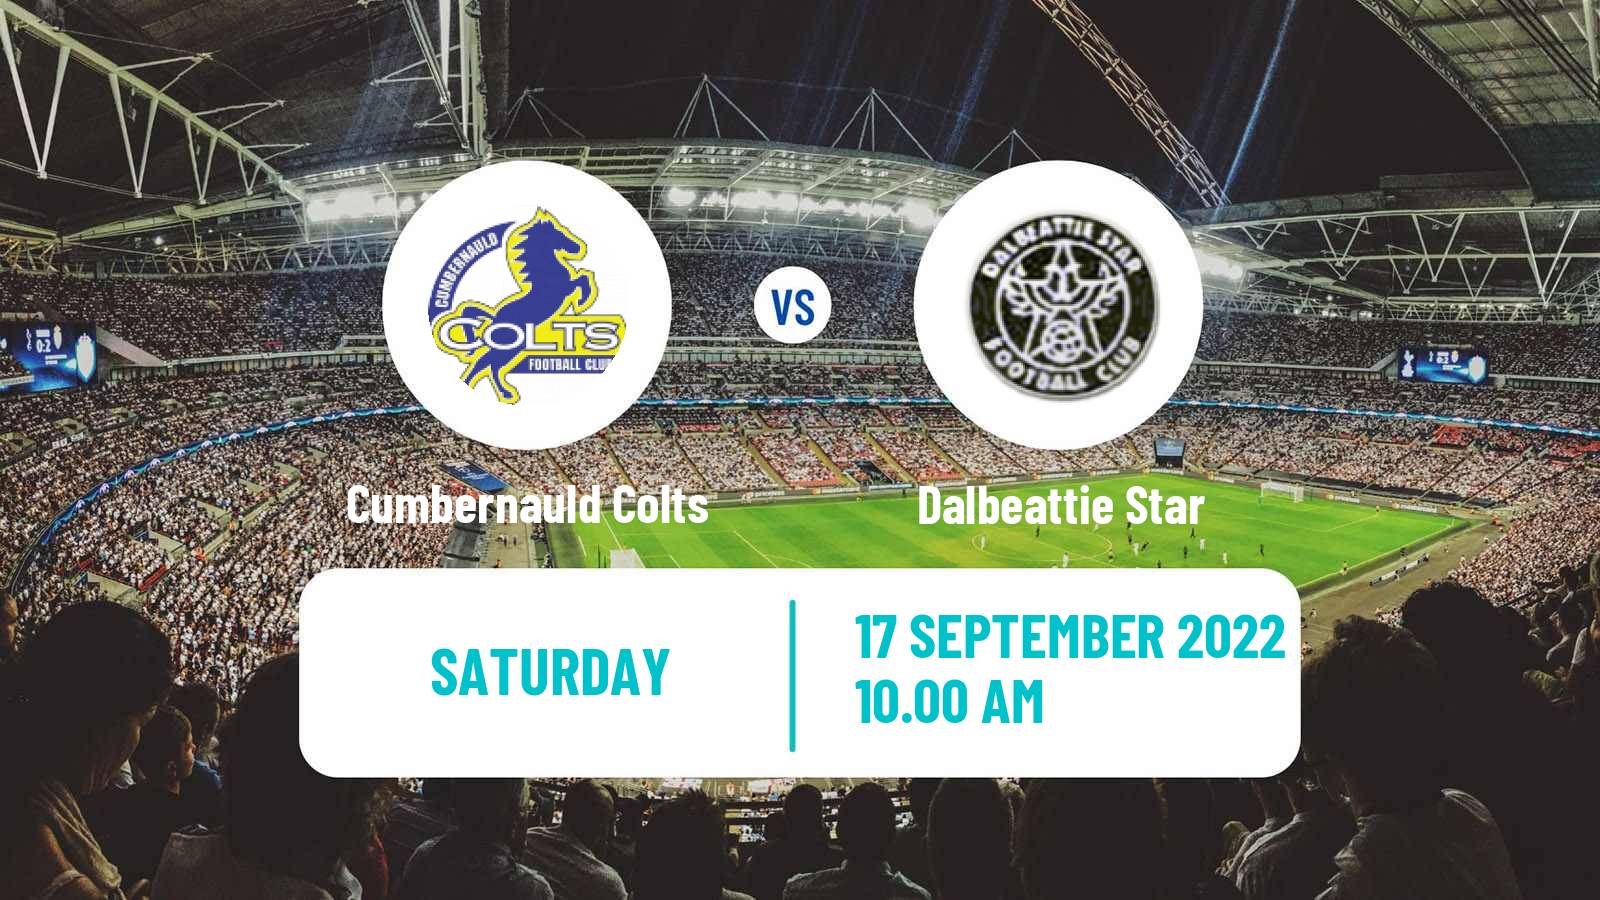 Soccer Scottish Cup Cumbernauld Colts - Dalbeattie Star